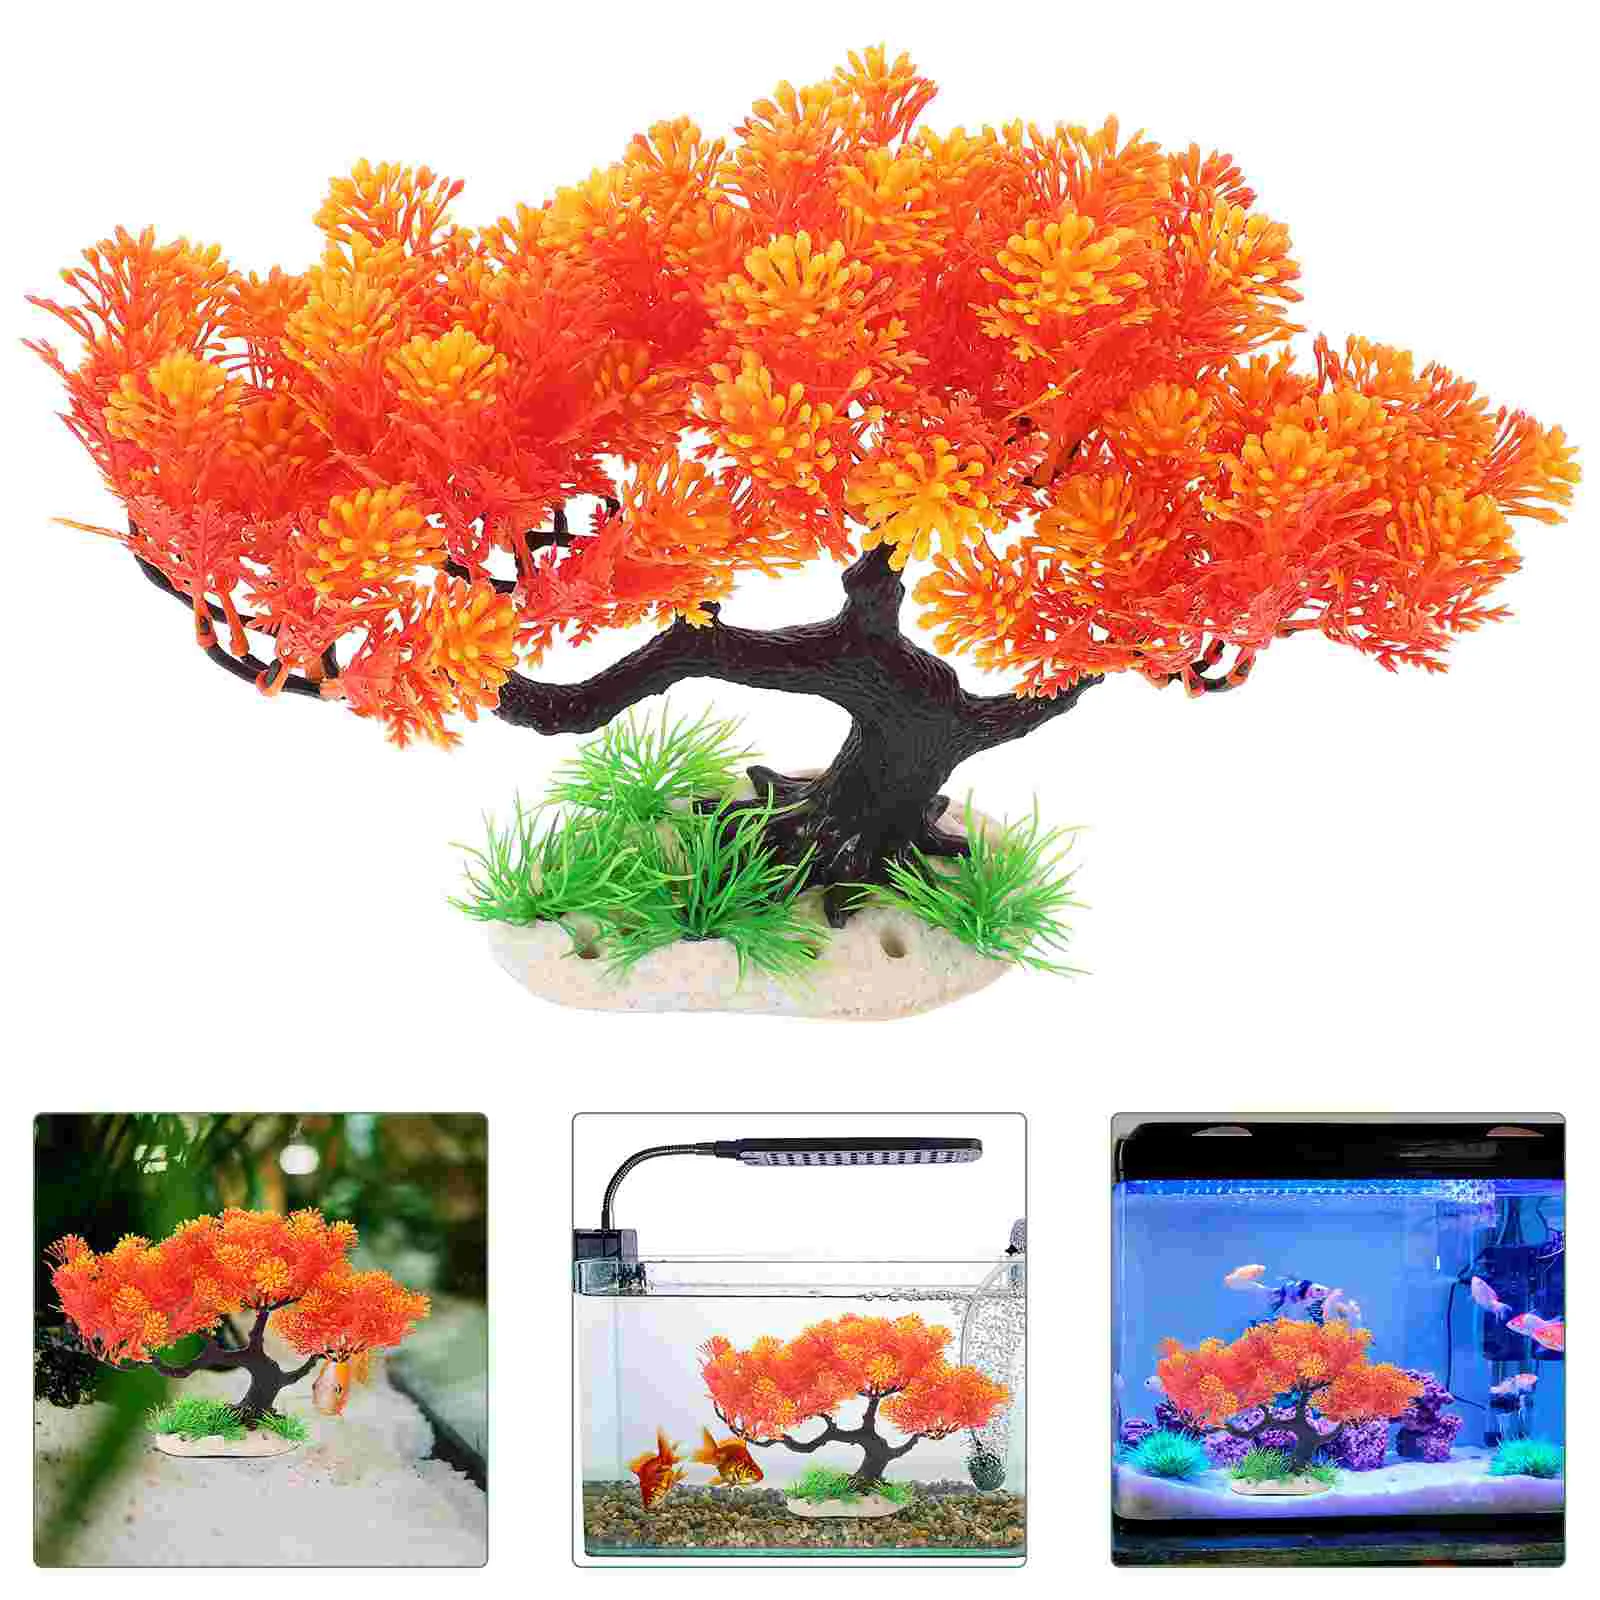 

Fish Tank Landscaping Tree Aquarium Décor Fake Ornaments Model Resin Decorations Accessories Accessory